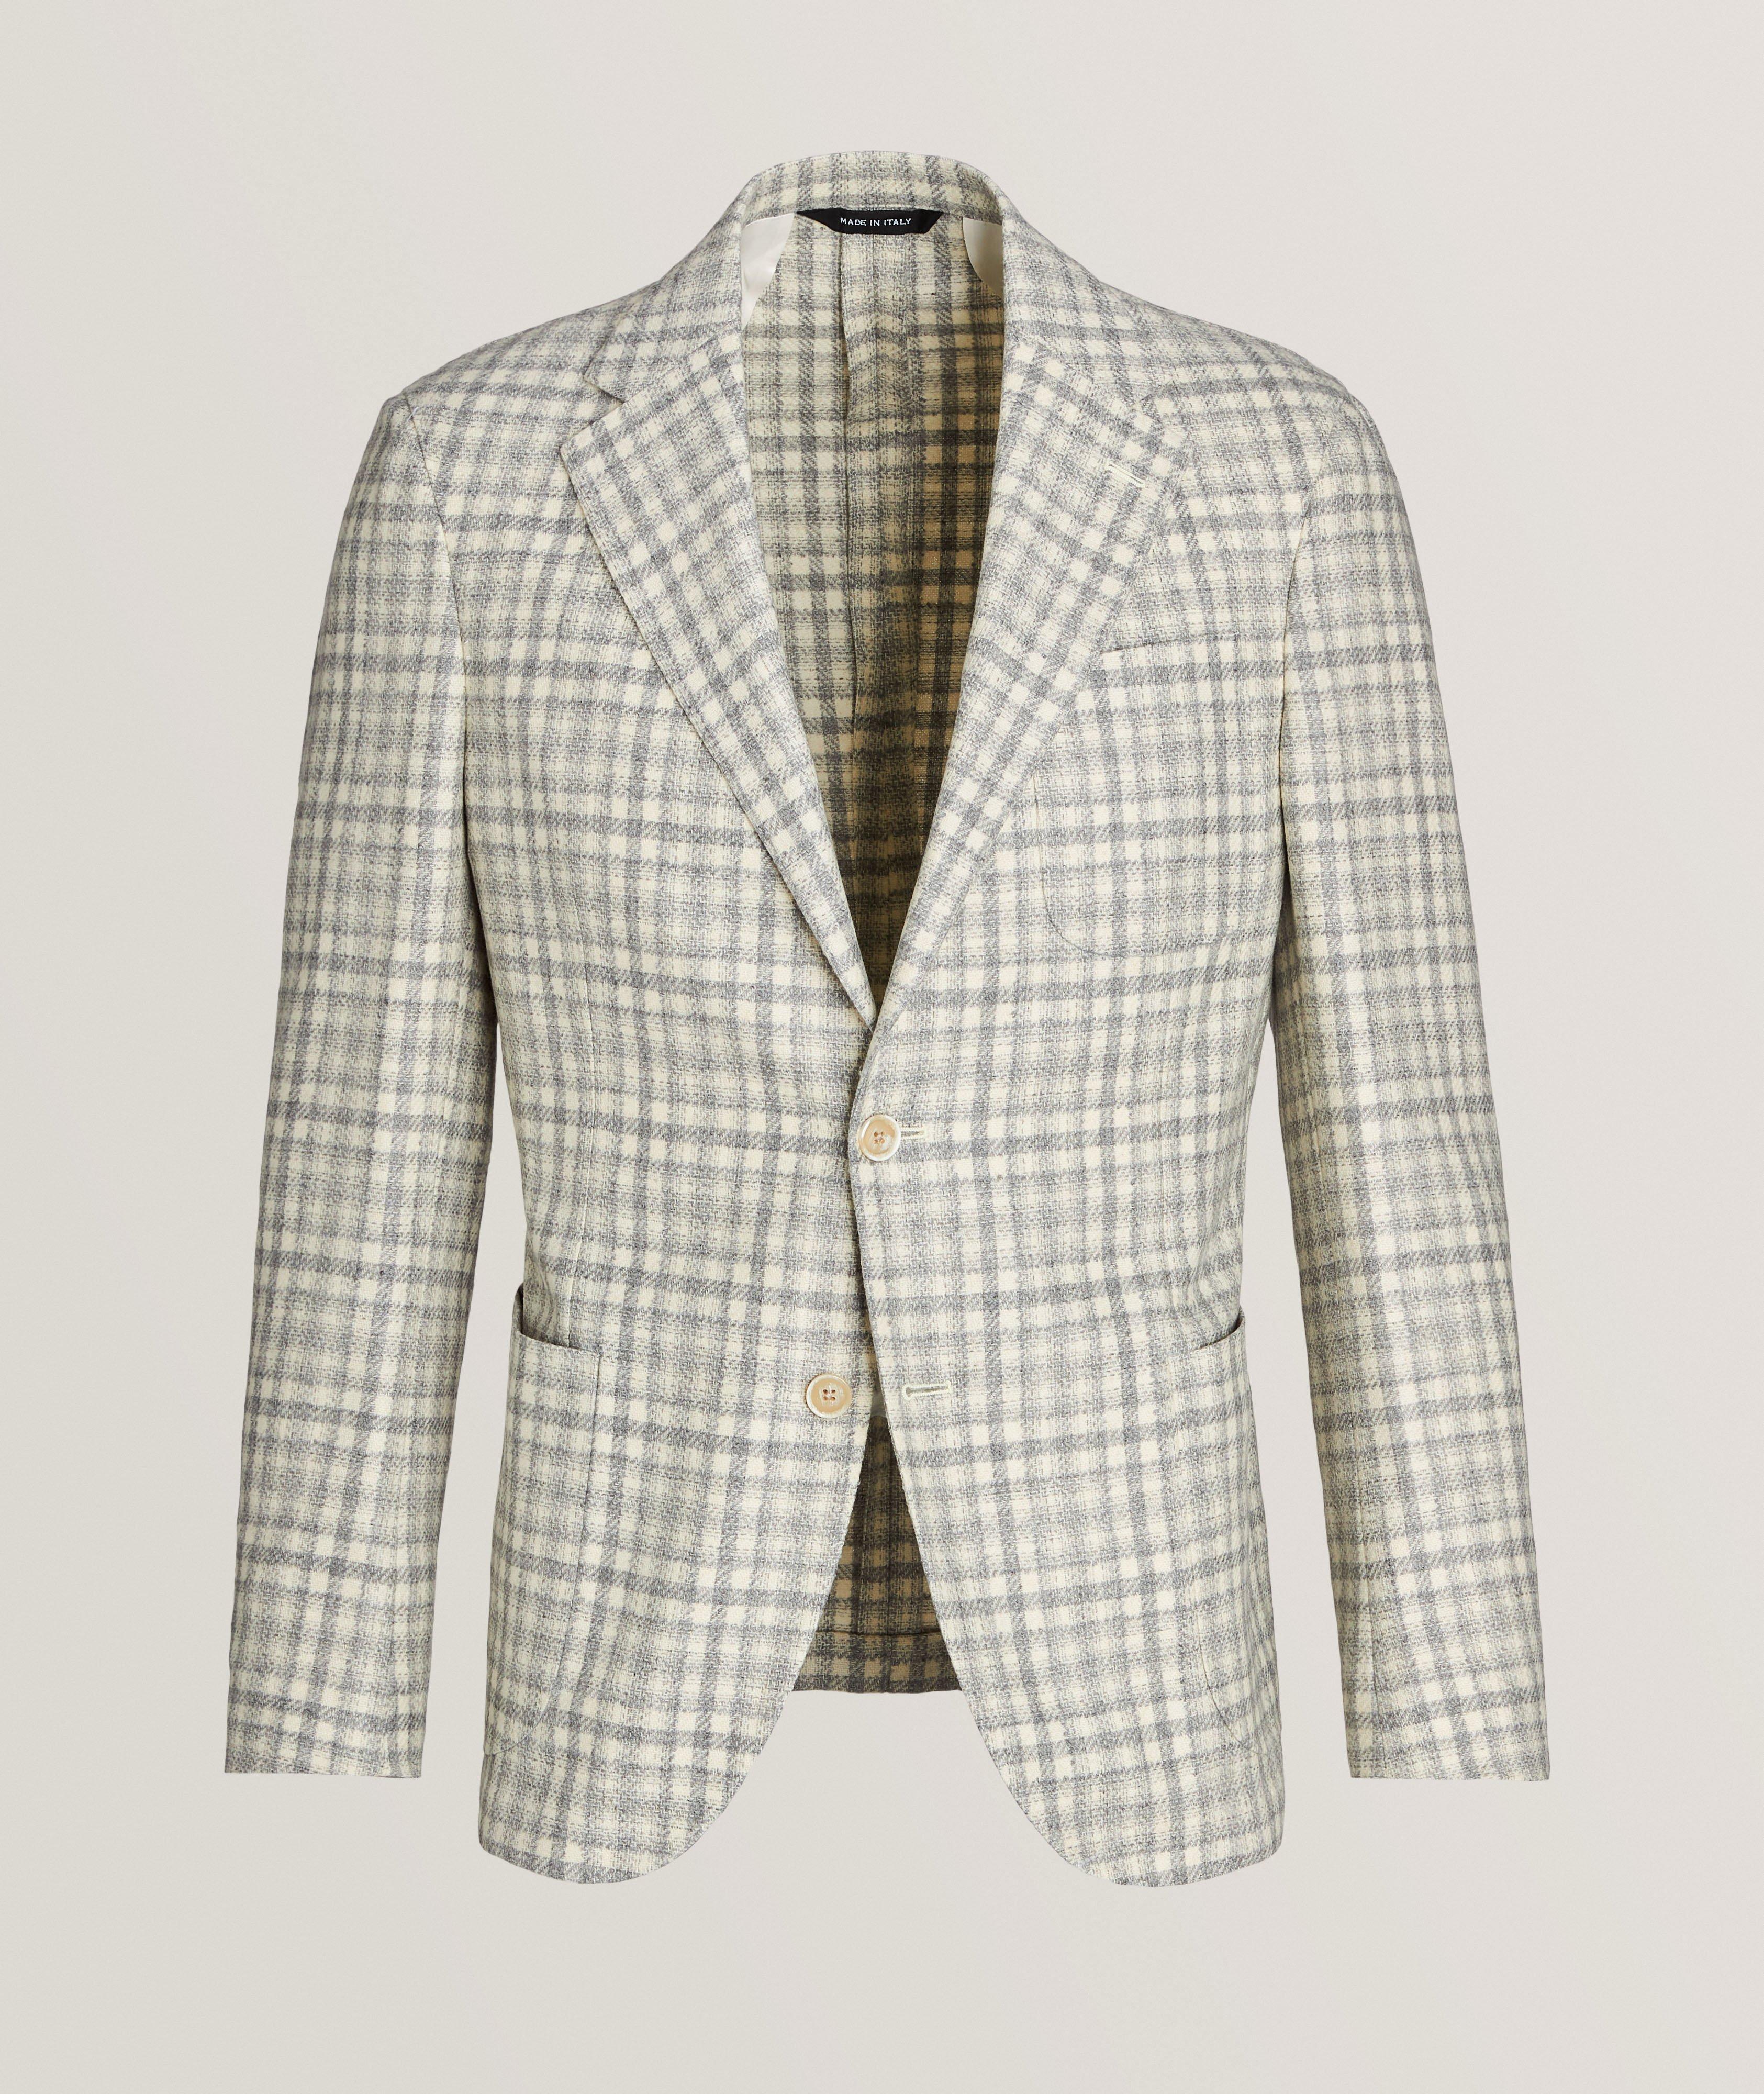 Berlino Checkered Wool-Cashmere Sport Jacket image 0